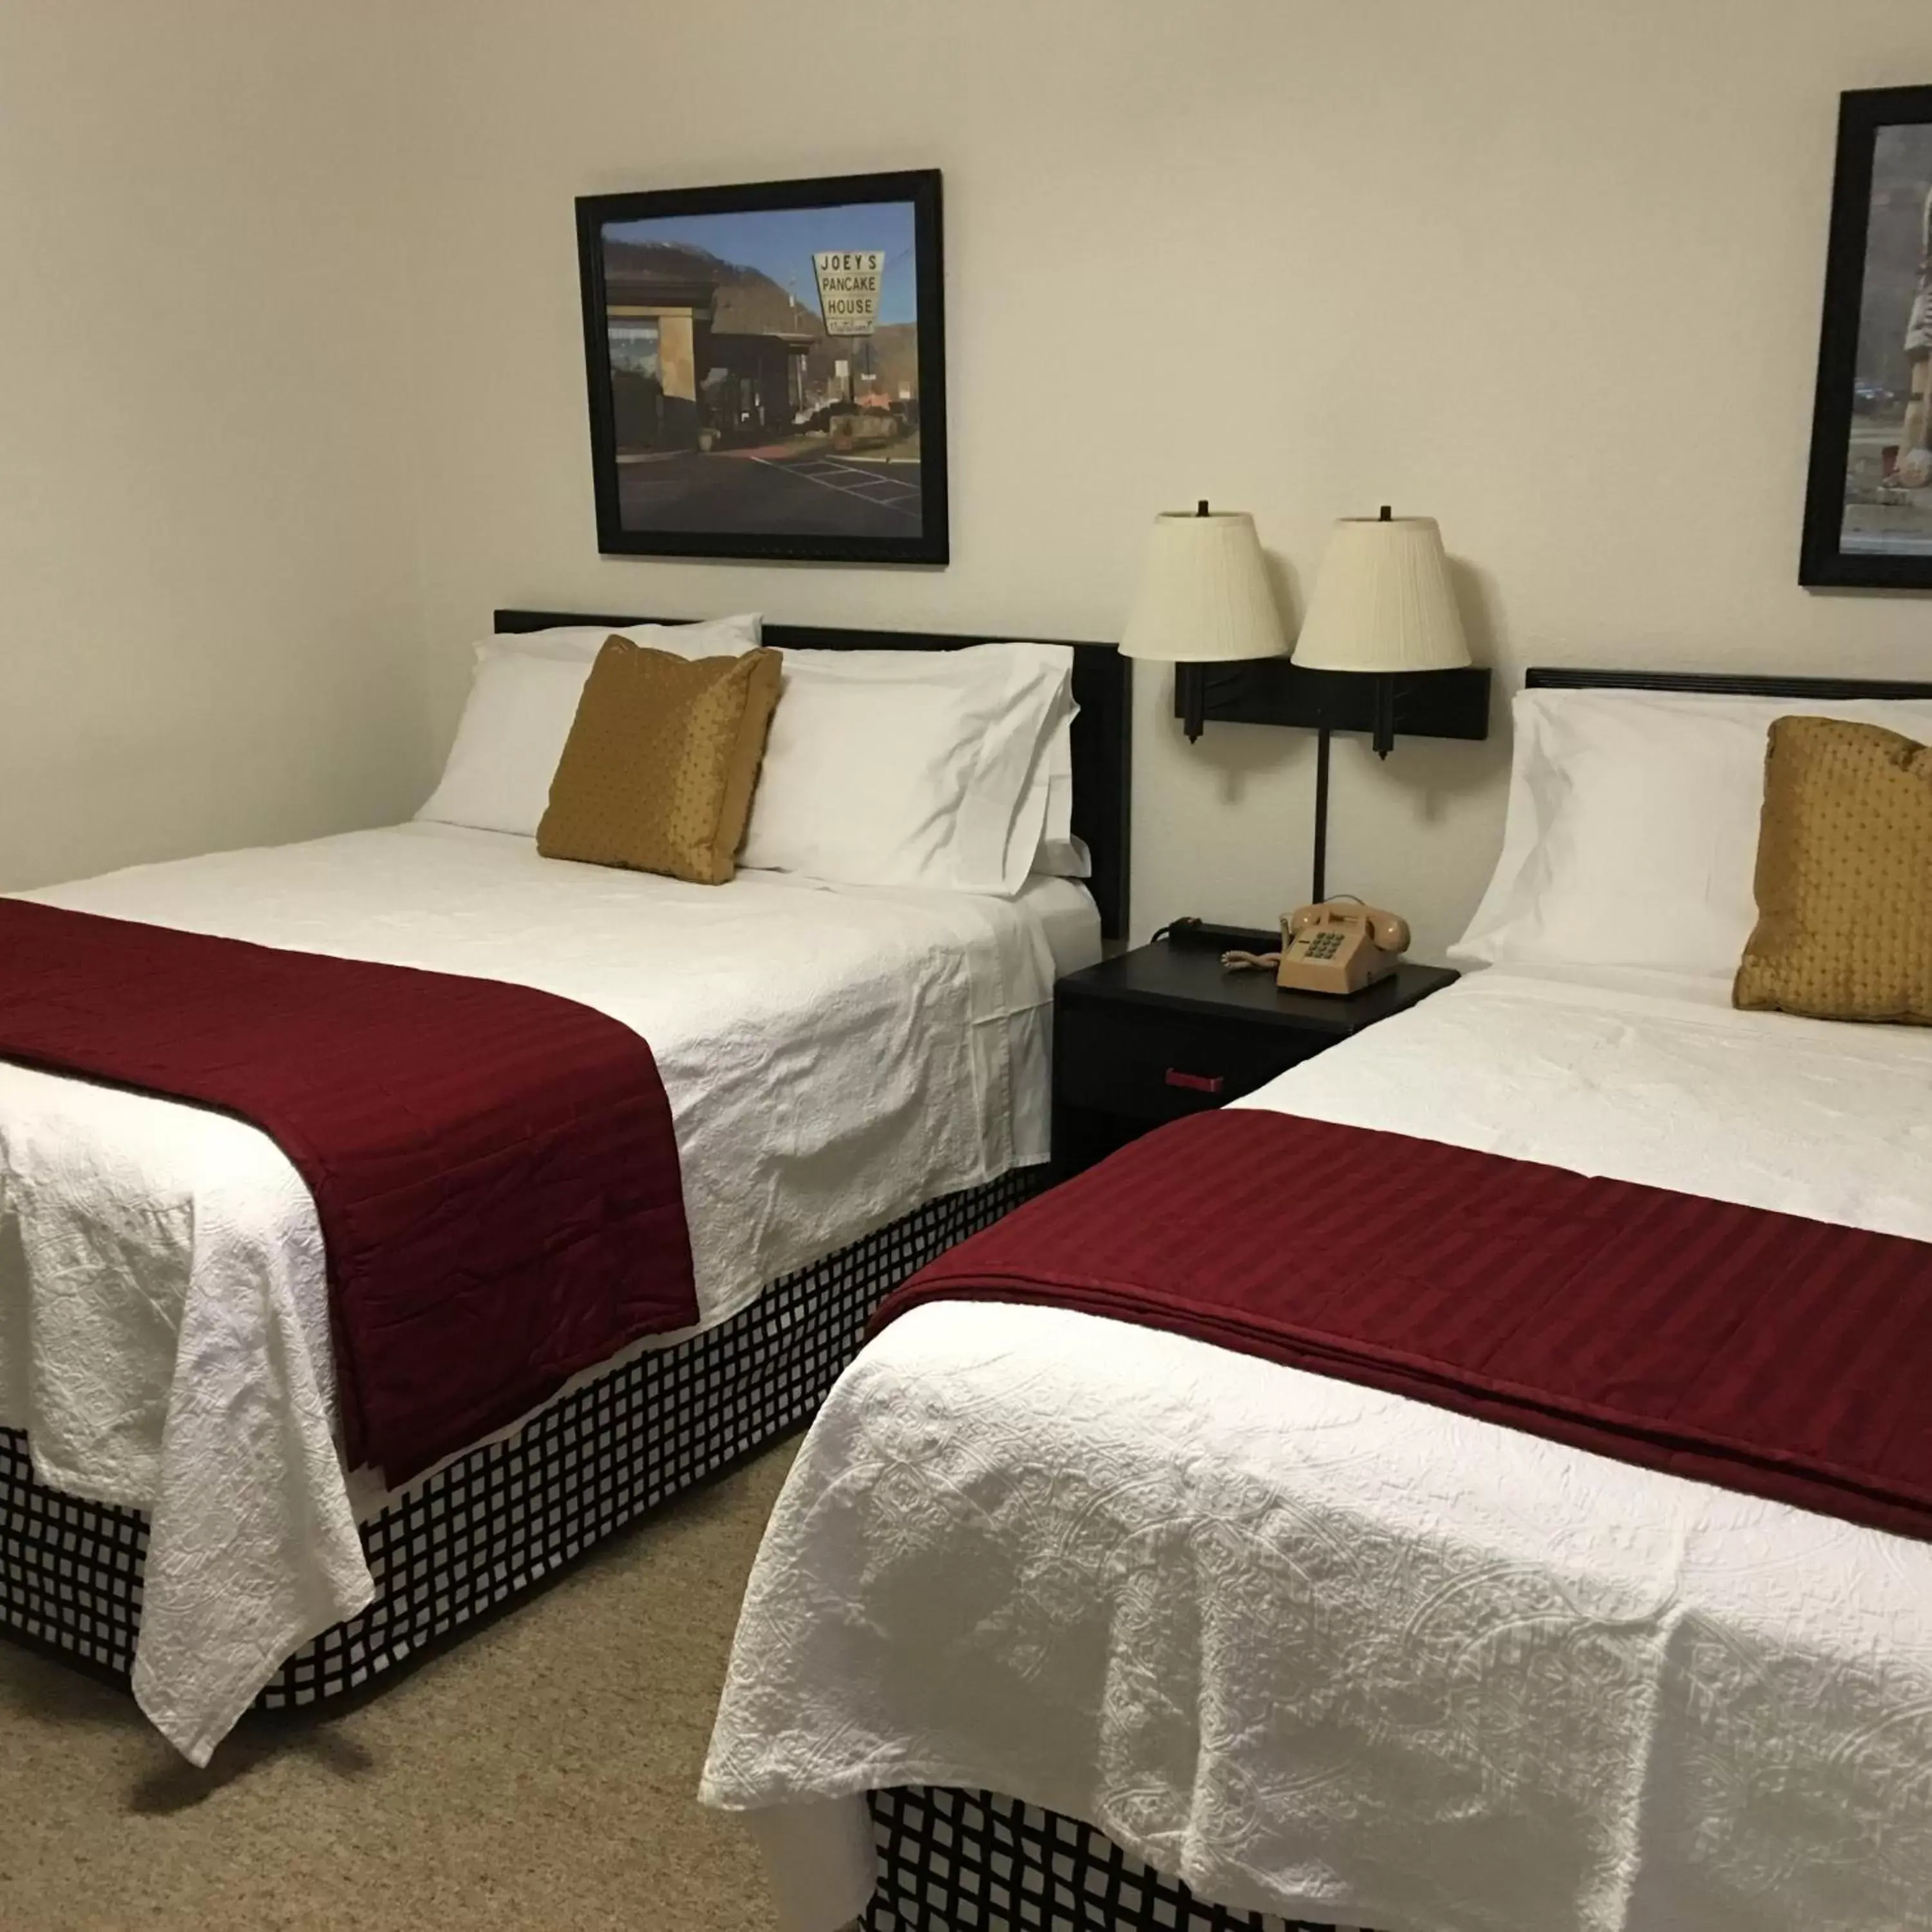 Bed in Cardinal Inn